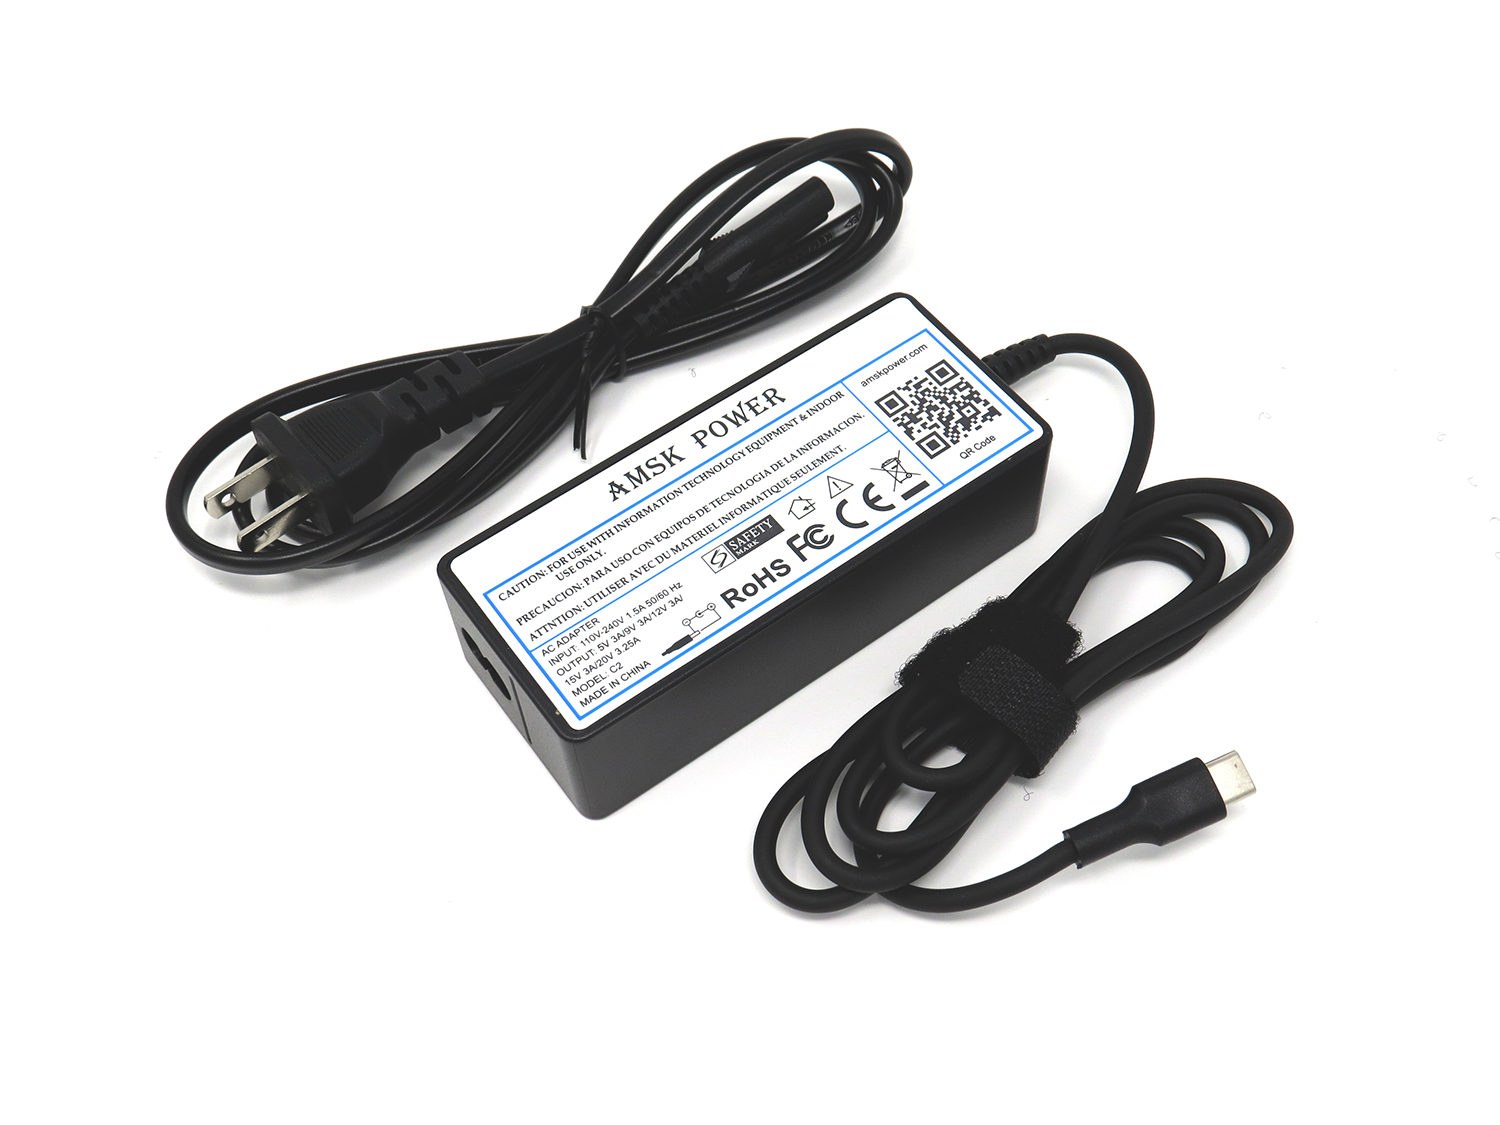 AMSK POWER Ac Adapter USB-C 65W for AsusPro B9440 B9440U B9440UA Power Supply Cord - image 1 of 1